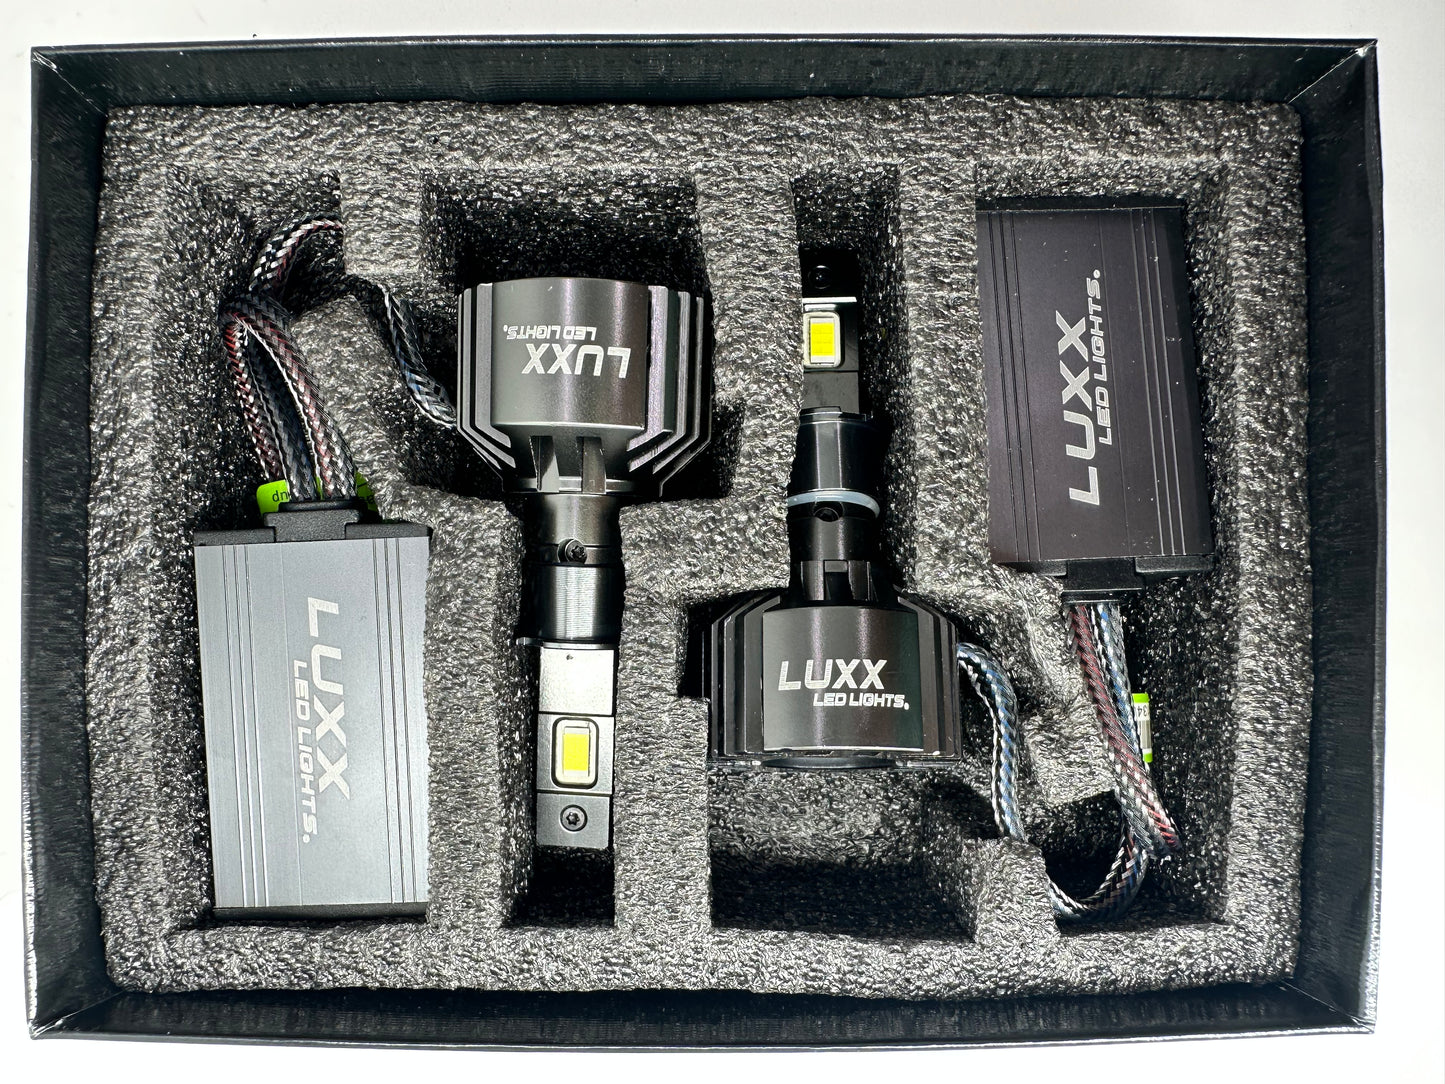 LUXX LEDs 9007 High Power LED Kit